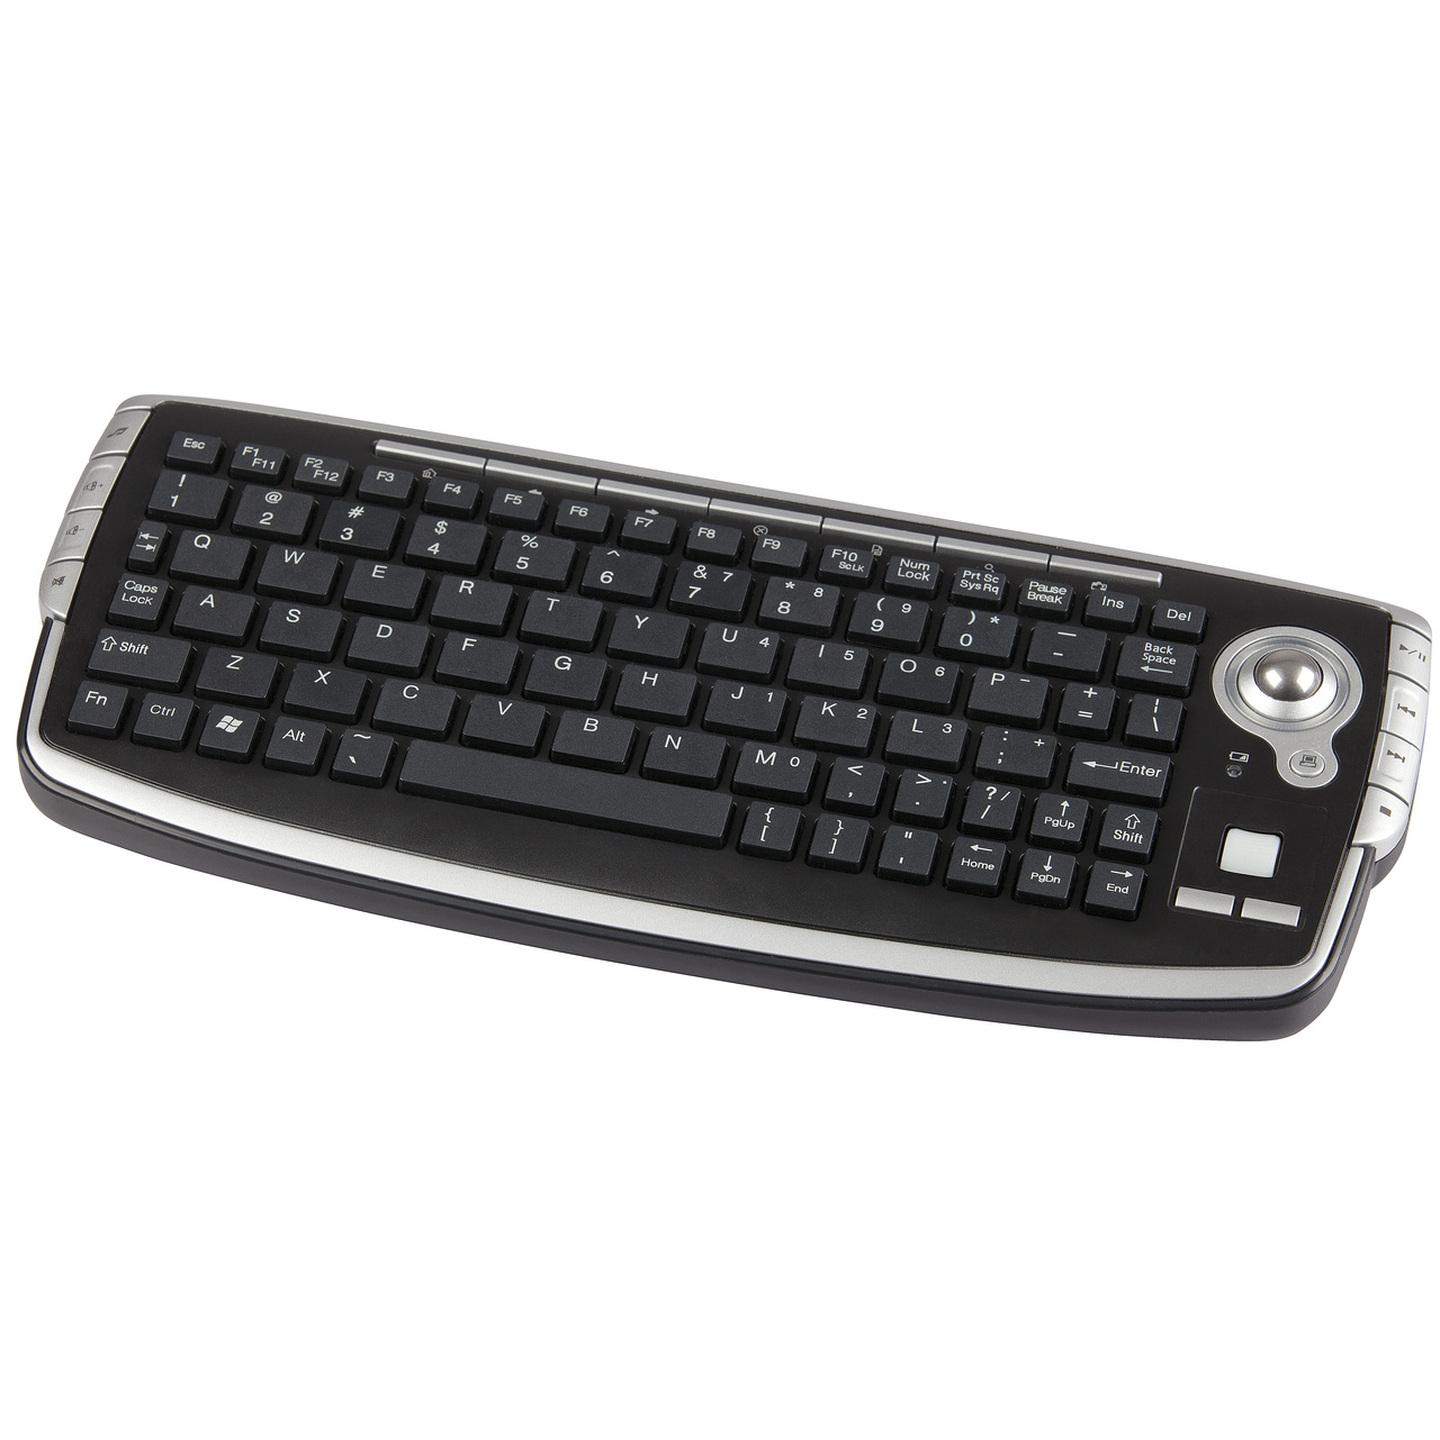 Mini Wireless Keyboard with Trackball